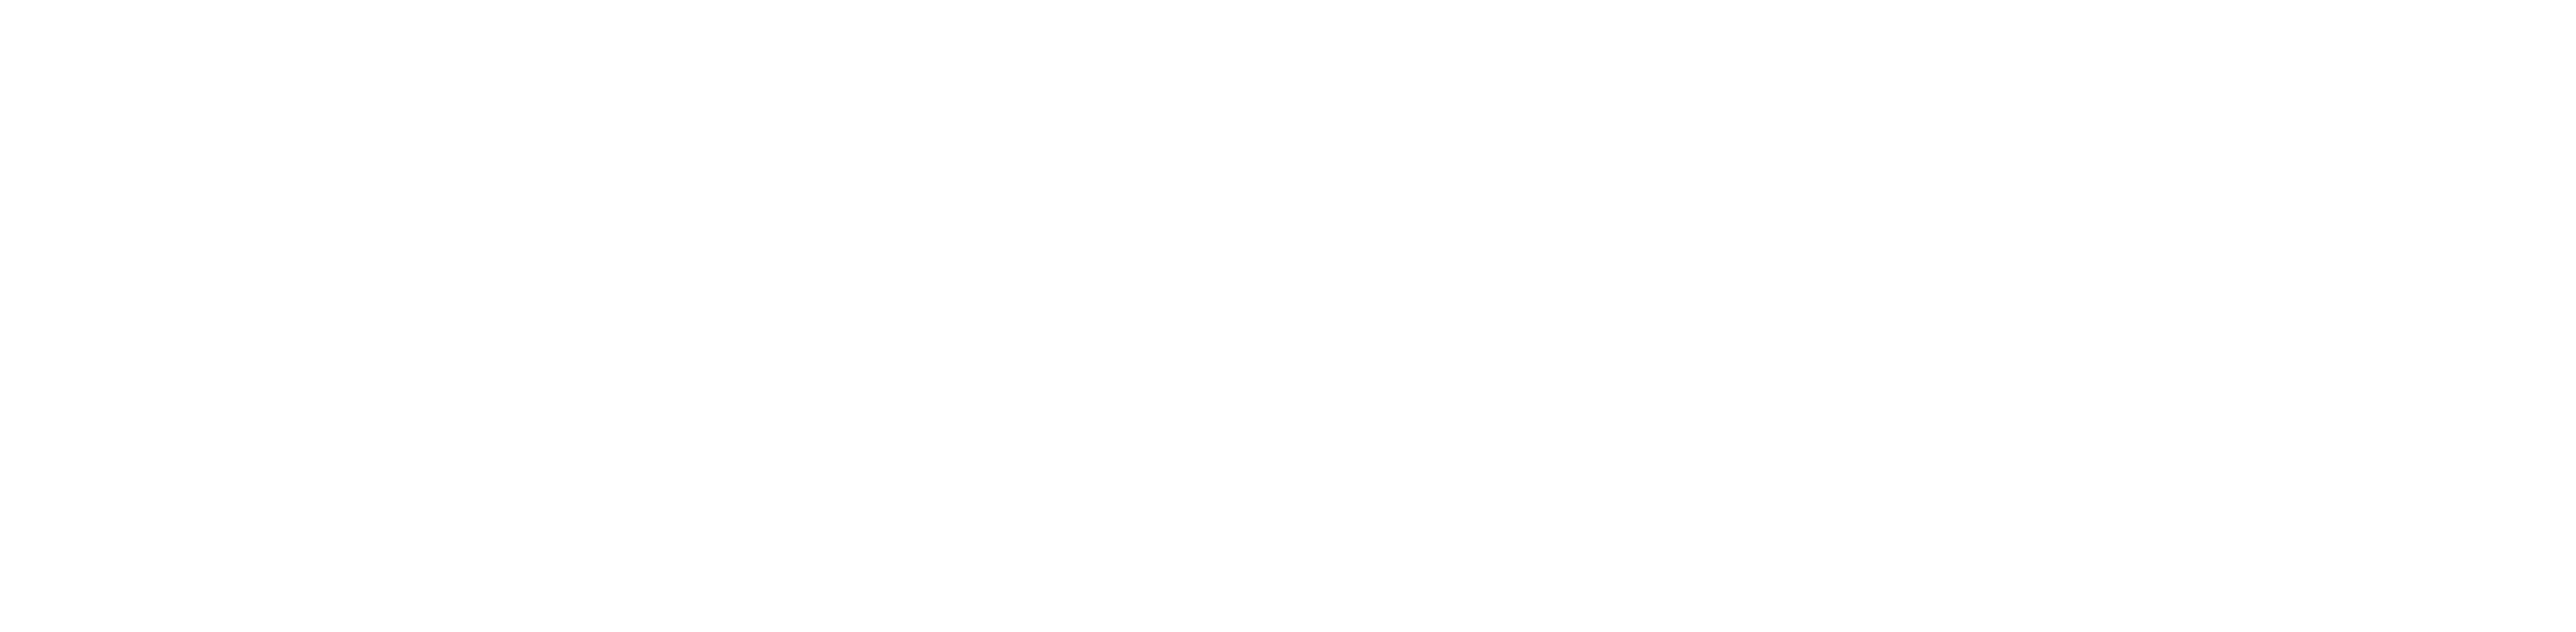 Virginia G. Piper Center for Creative Writing